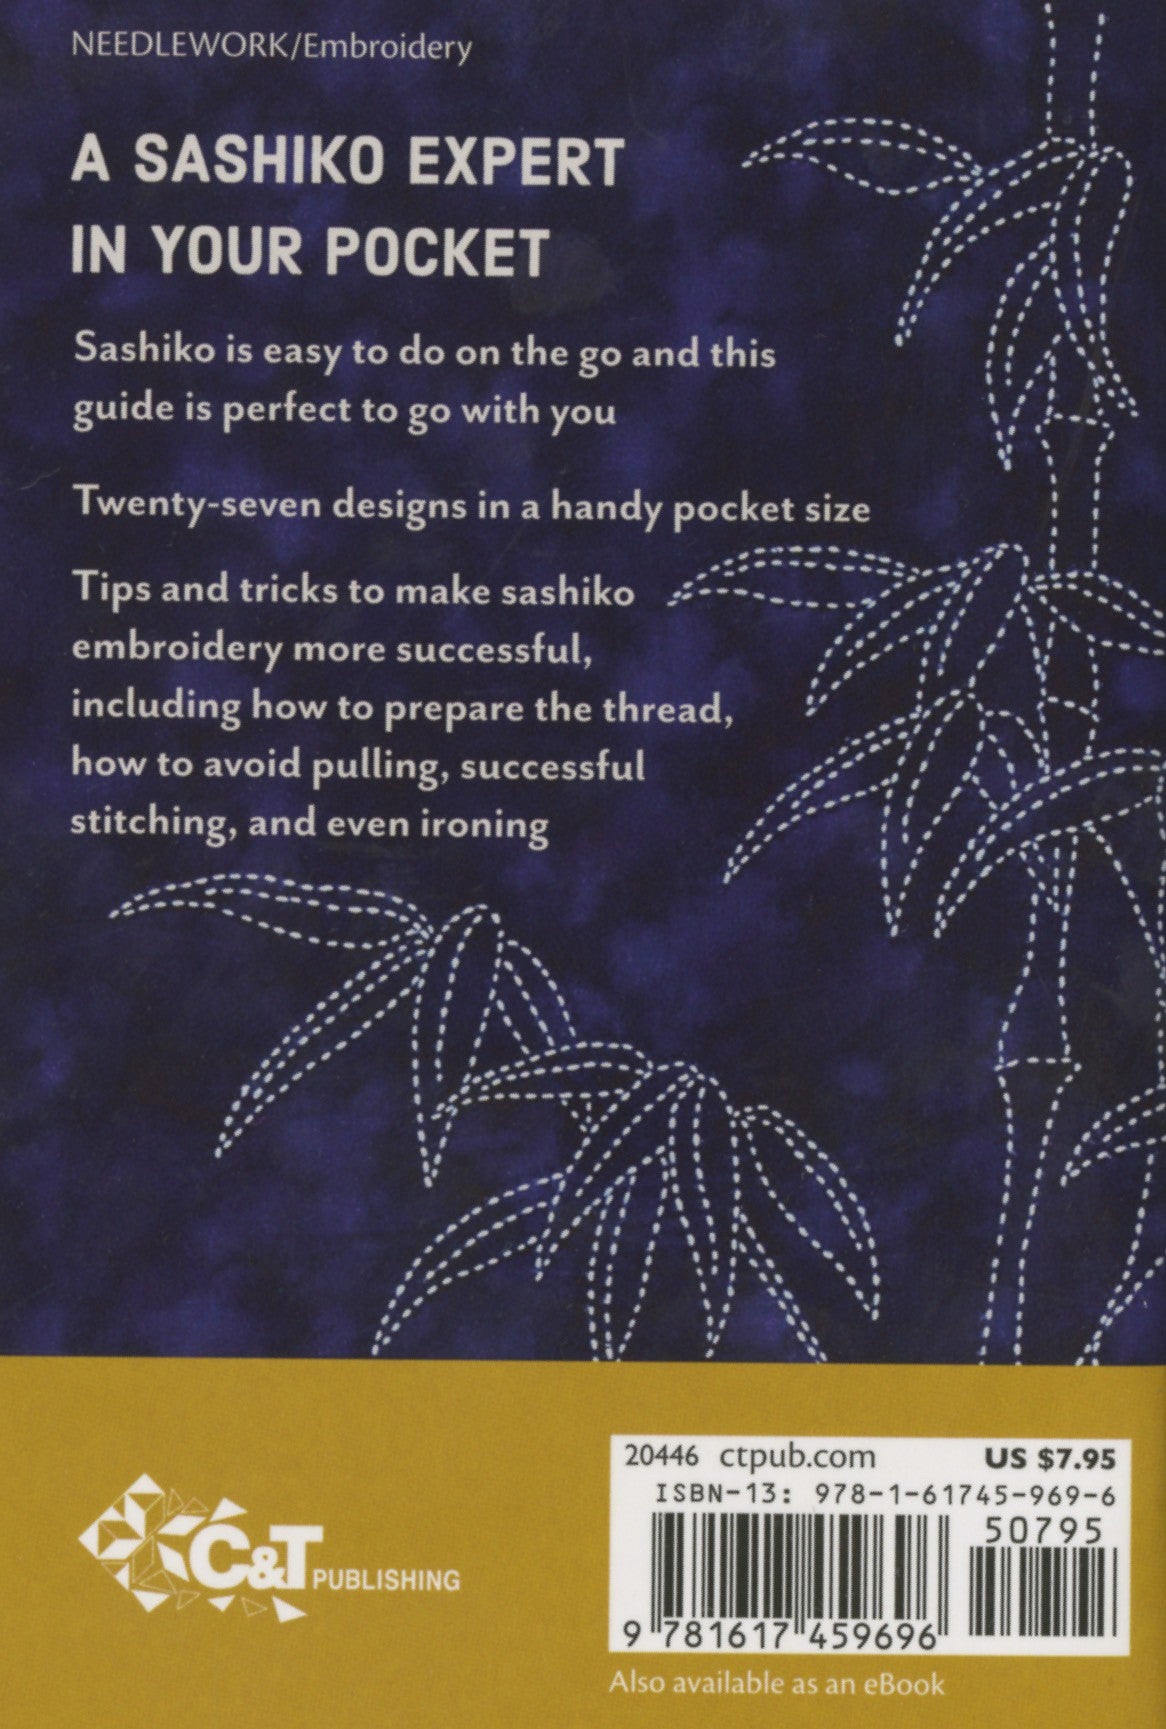 Sashiko Handy Pocket Guide by Sylvia Pippen for C&T Publishing